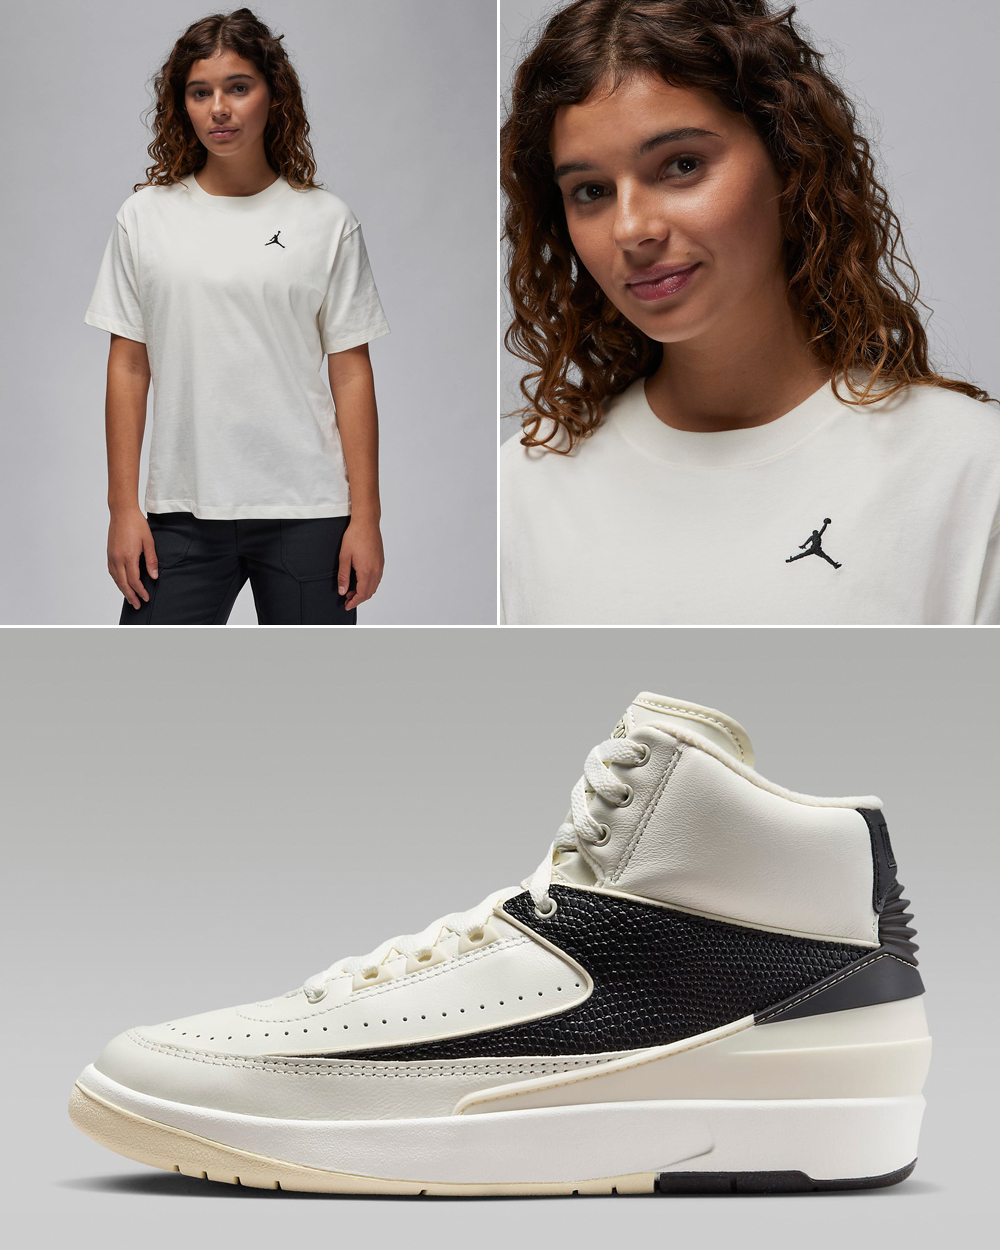 Air-Jordan-2-Womens-Sail-Black-Shirt-Matching-Outfit